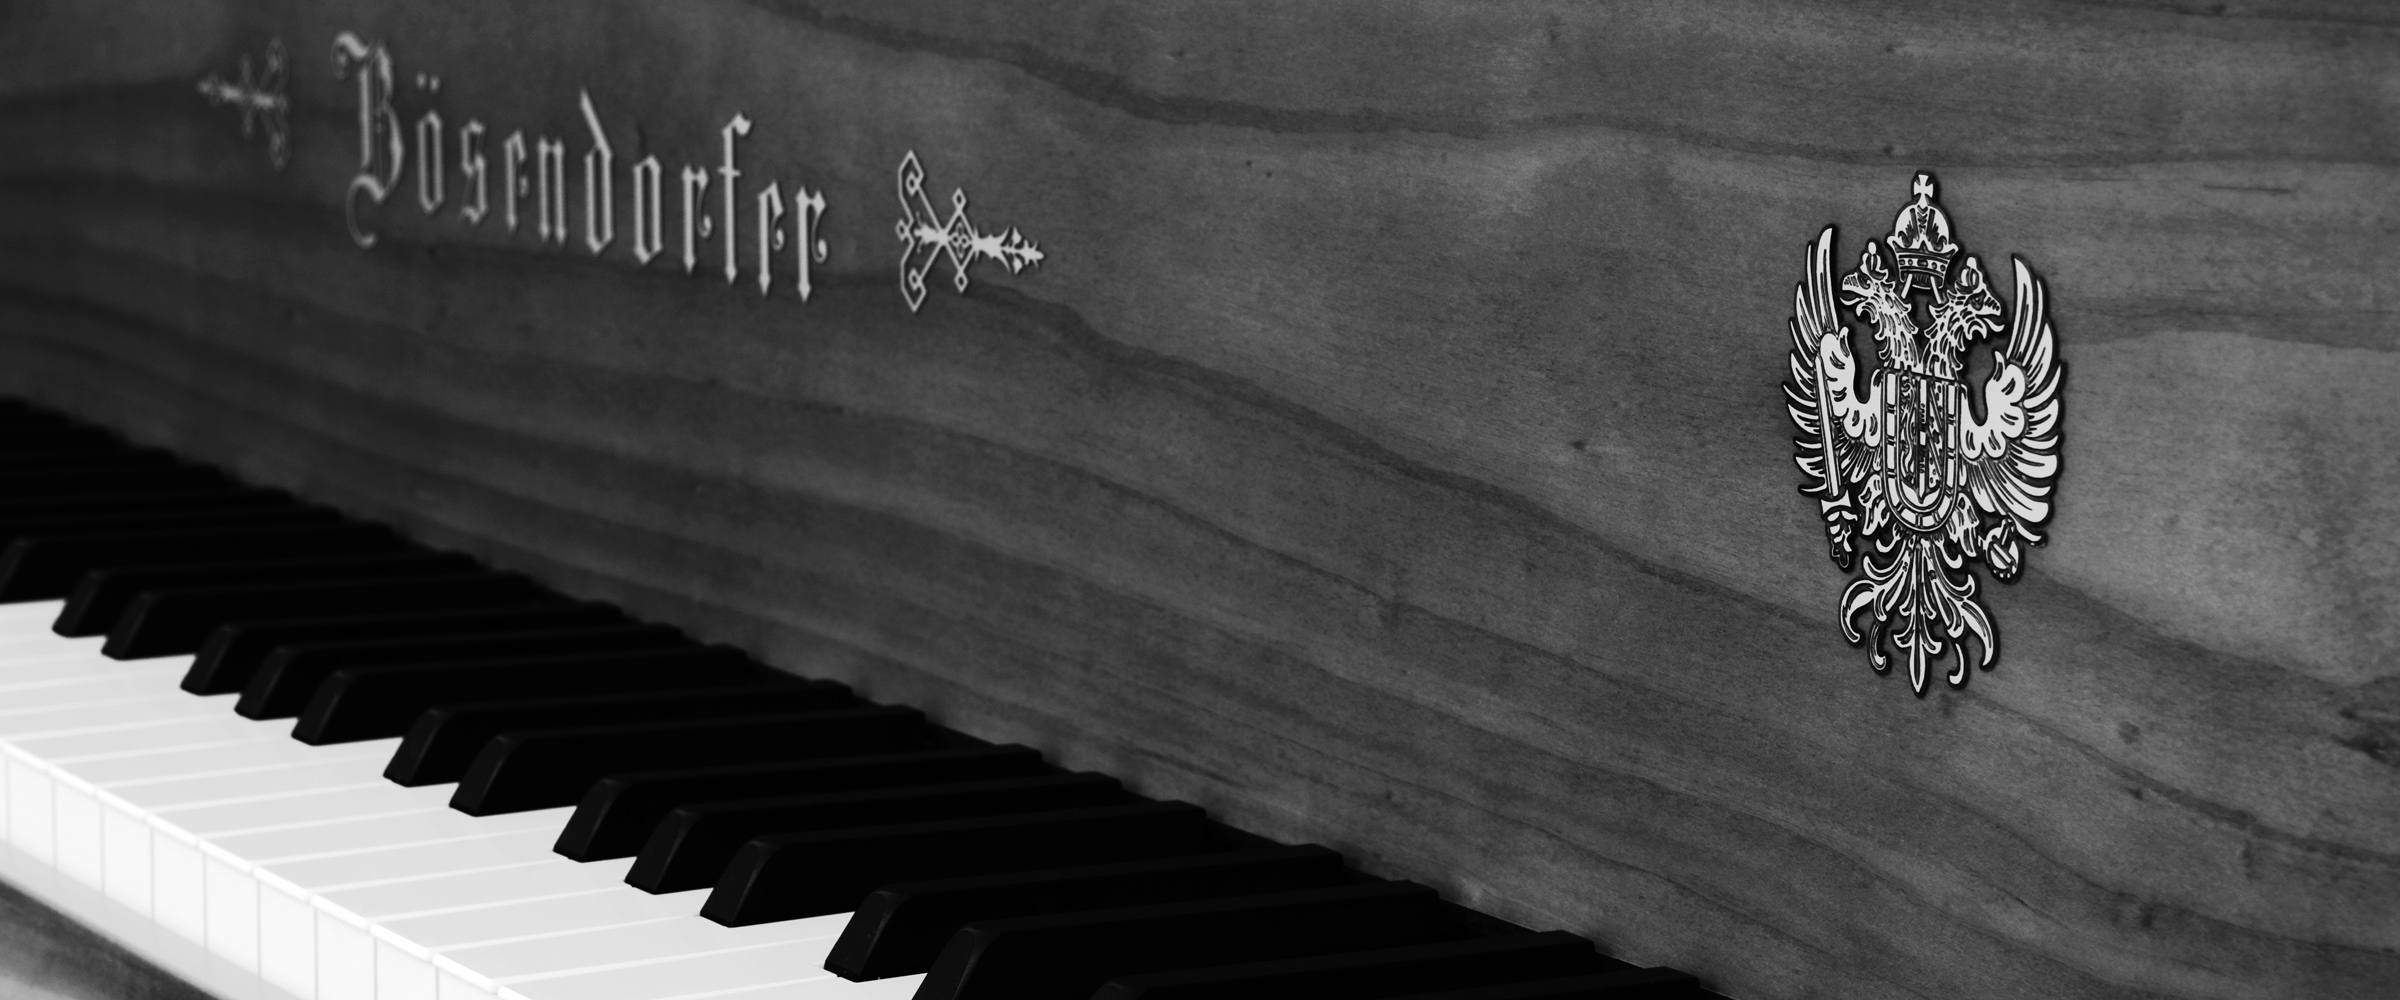 Clavier d’un piano Bösendorfer, avec blason et nom de la marque